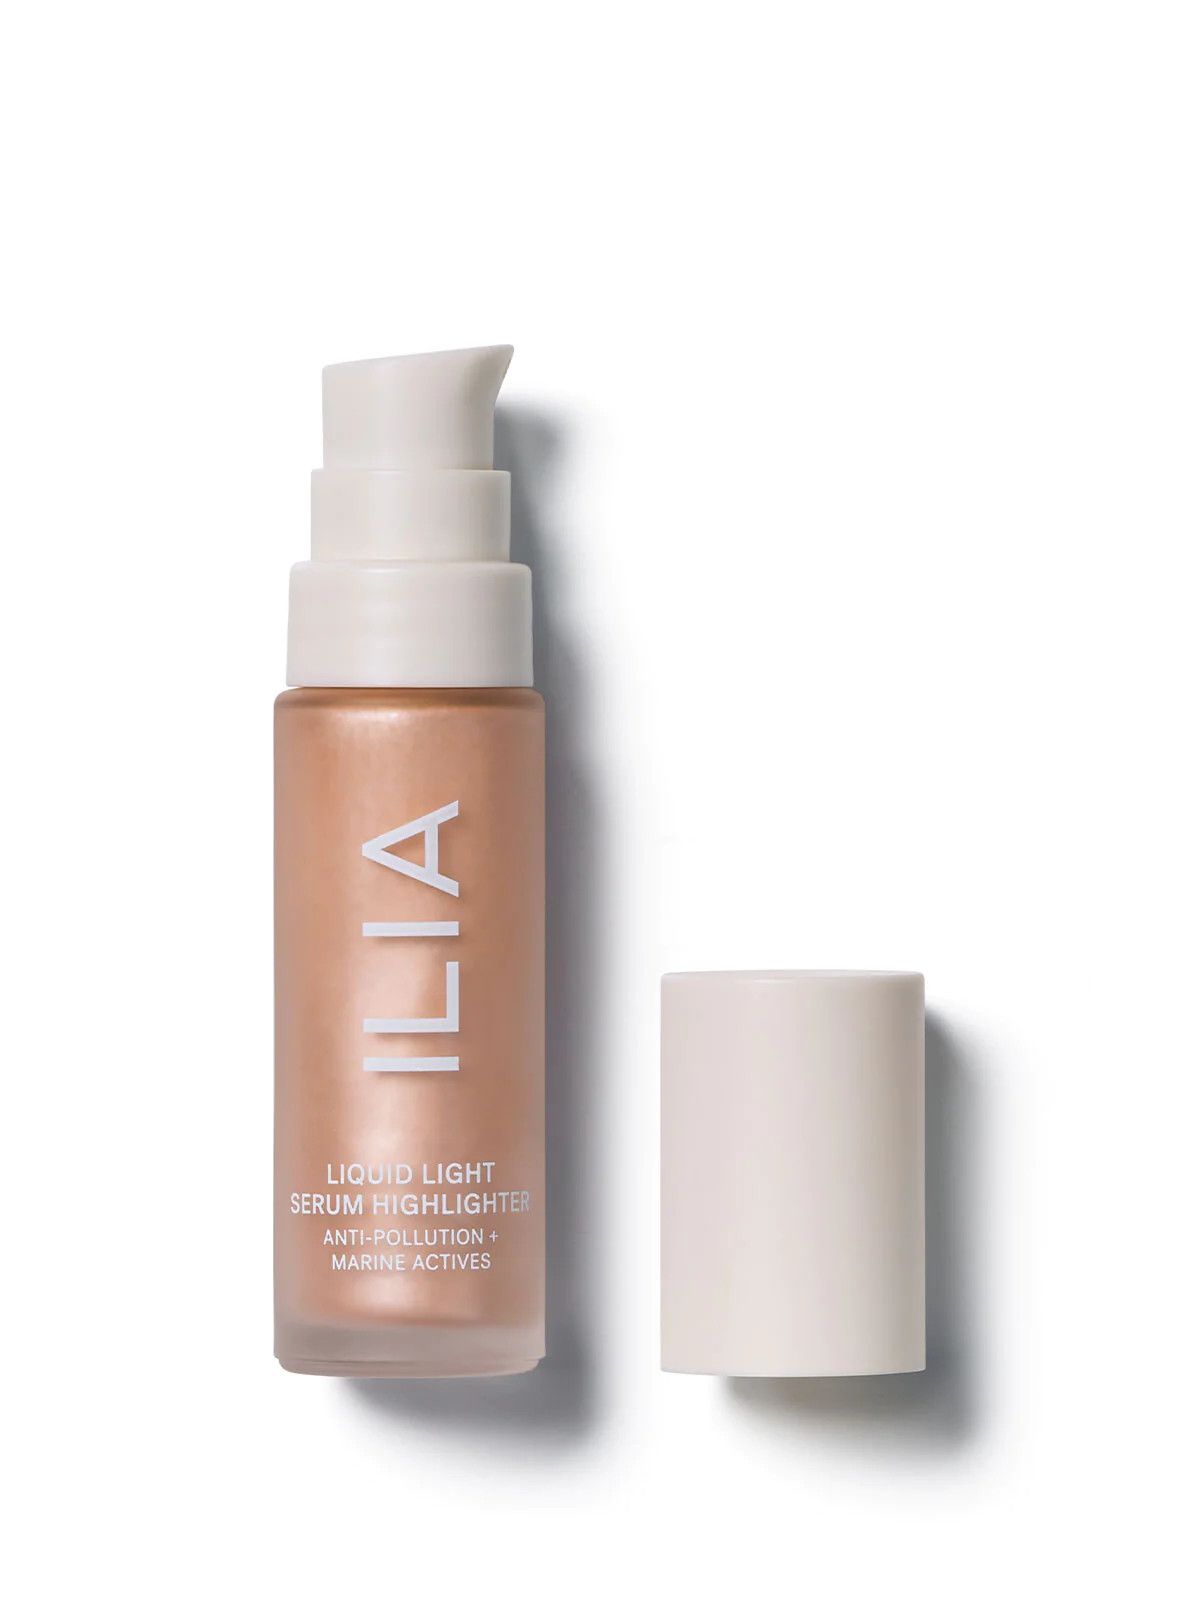 ILIA Liquid Light Serum Highlighter - Astrid | ILIA Beauty | Best Highlighter | Beauty  | ILIA Beauty